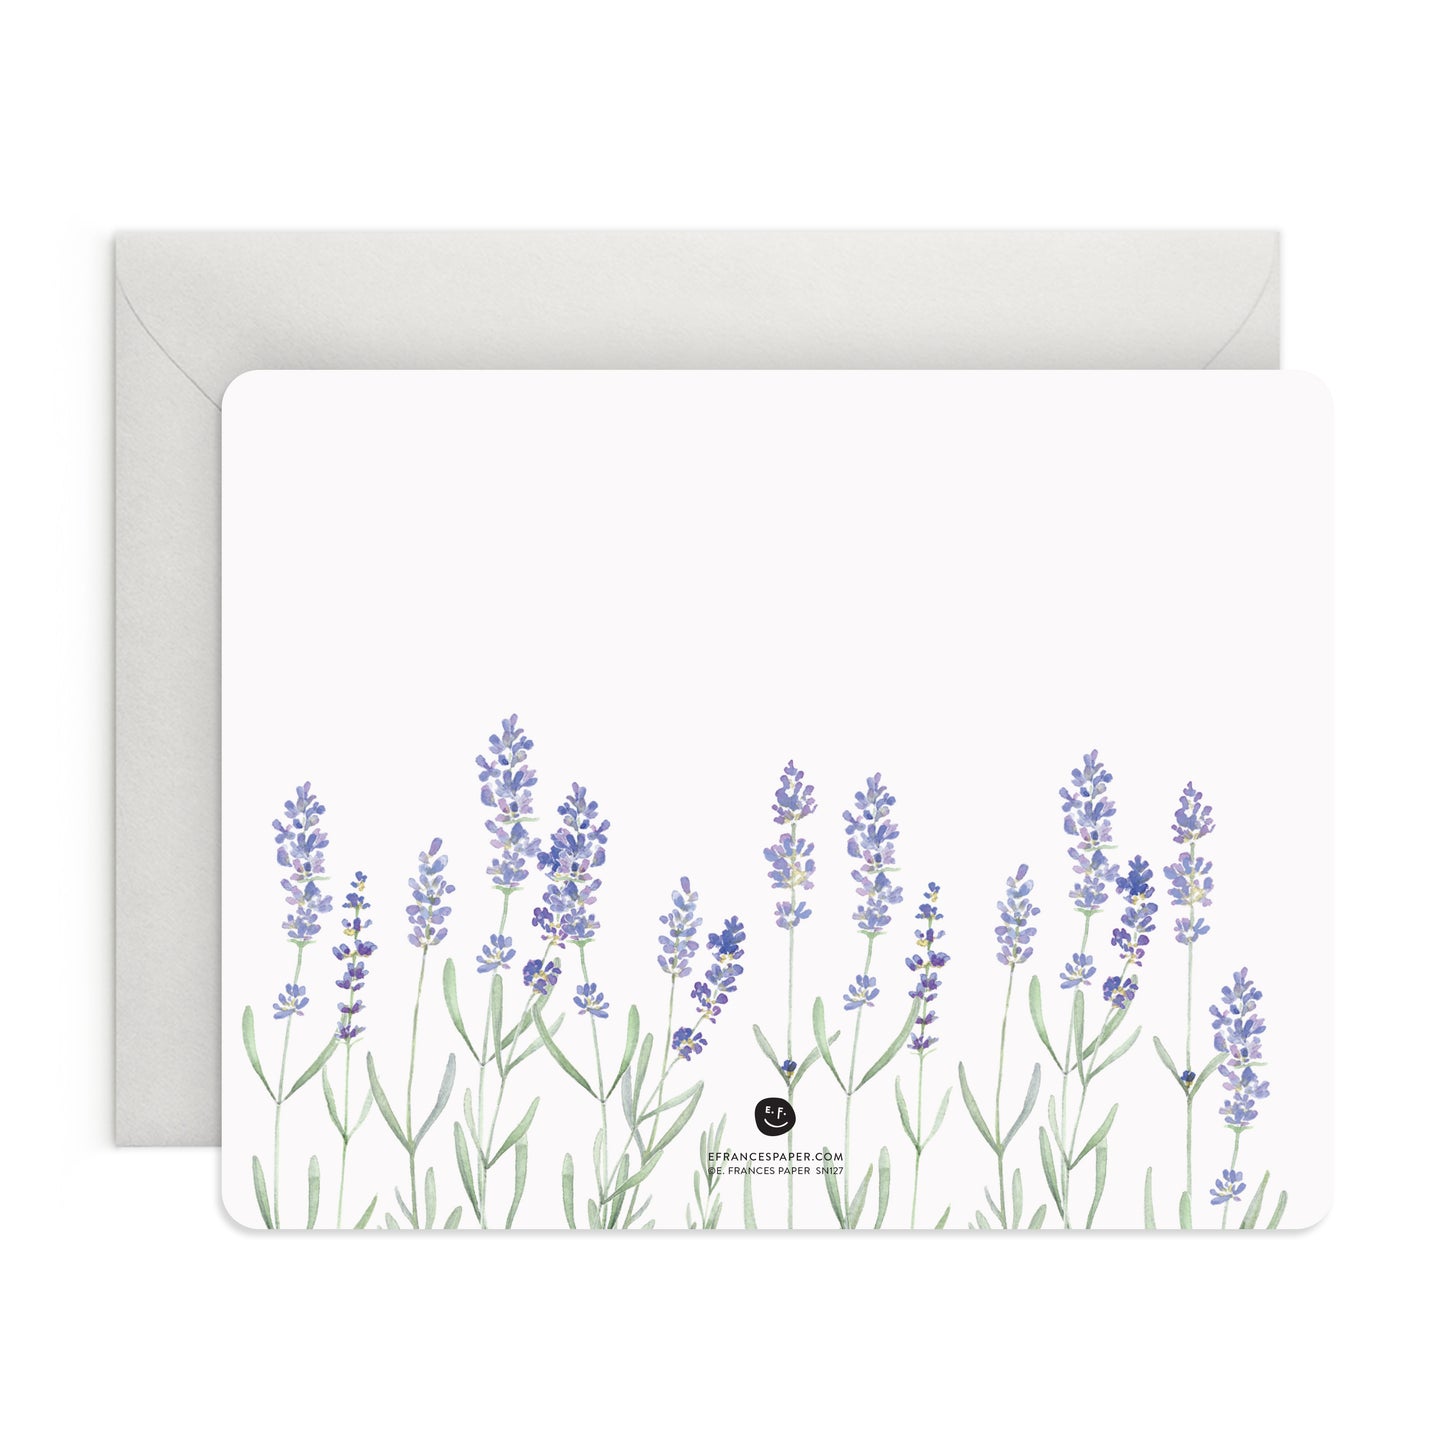 Lavender Flat Notes